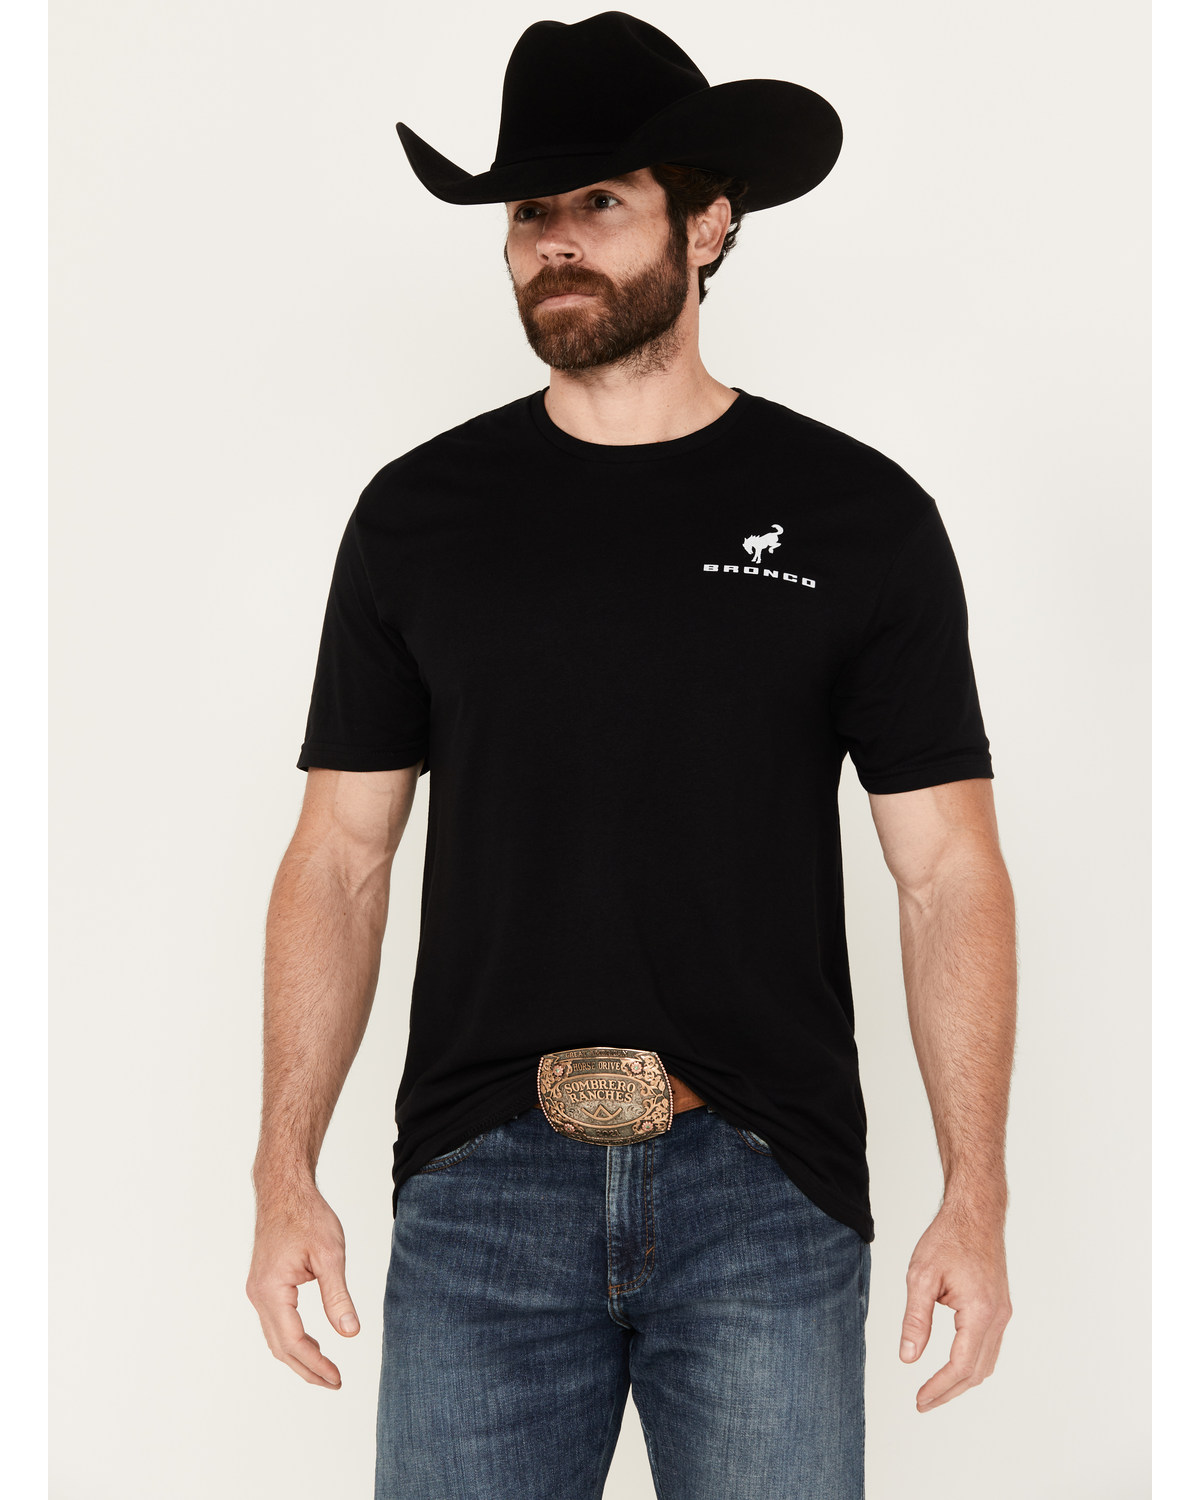 Buckwear Men's Bronco Trail Buster Short Sleeve Graphic T-Shirt